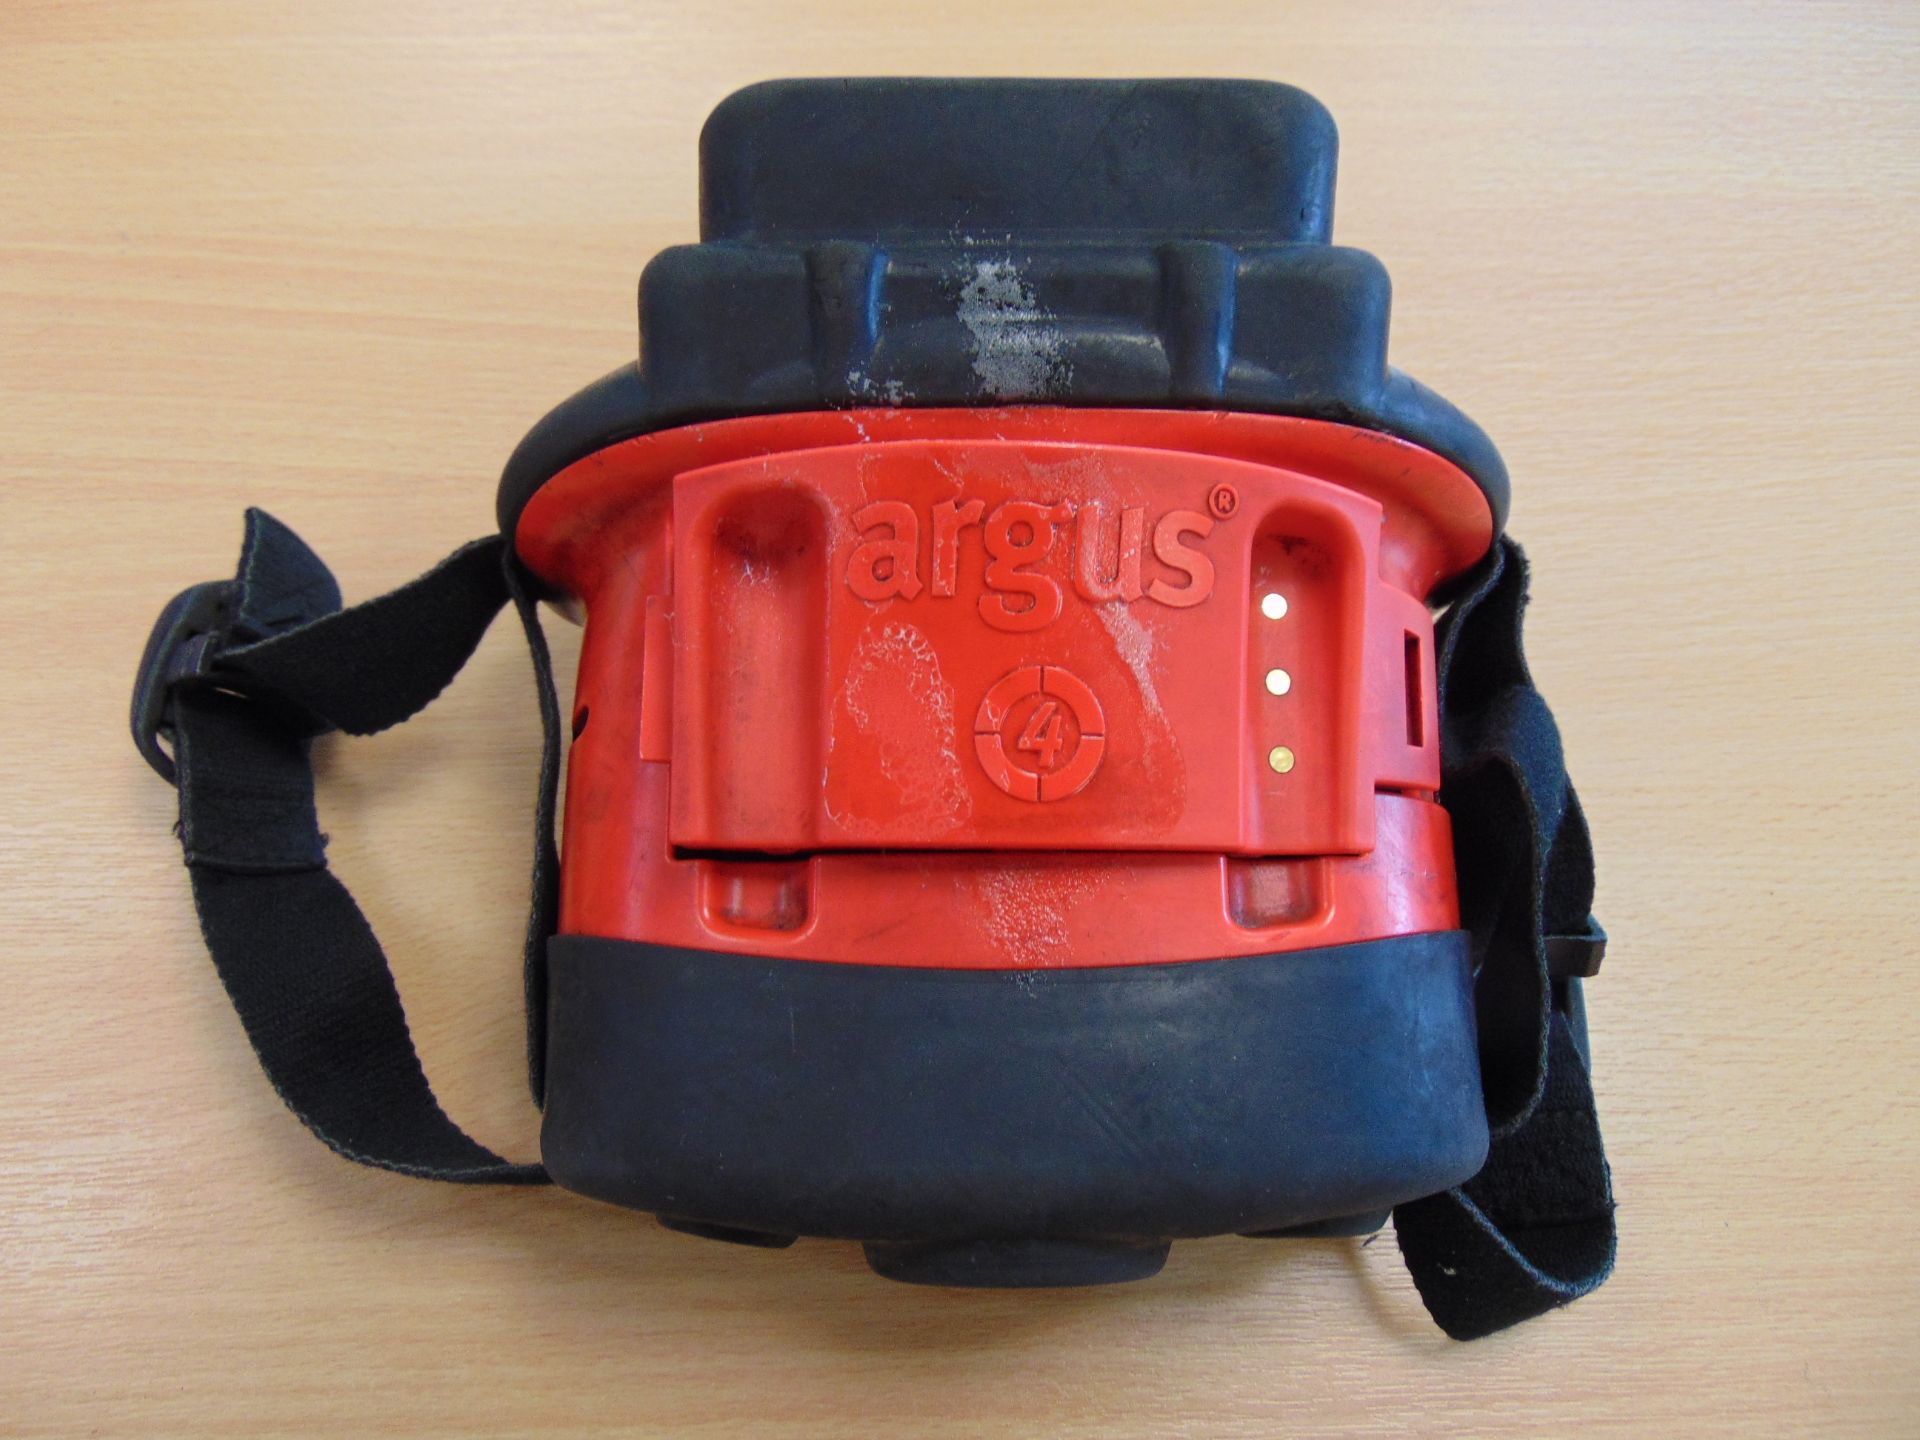 Argus 4 E2V Thermal Imaging Camera - Image 2 of 4